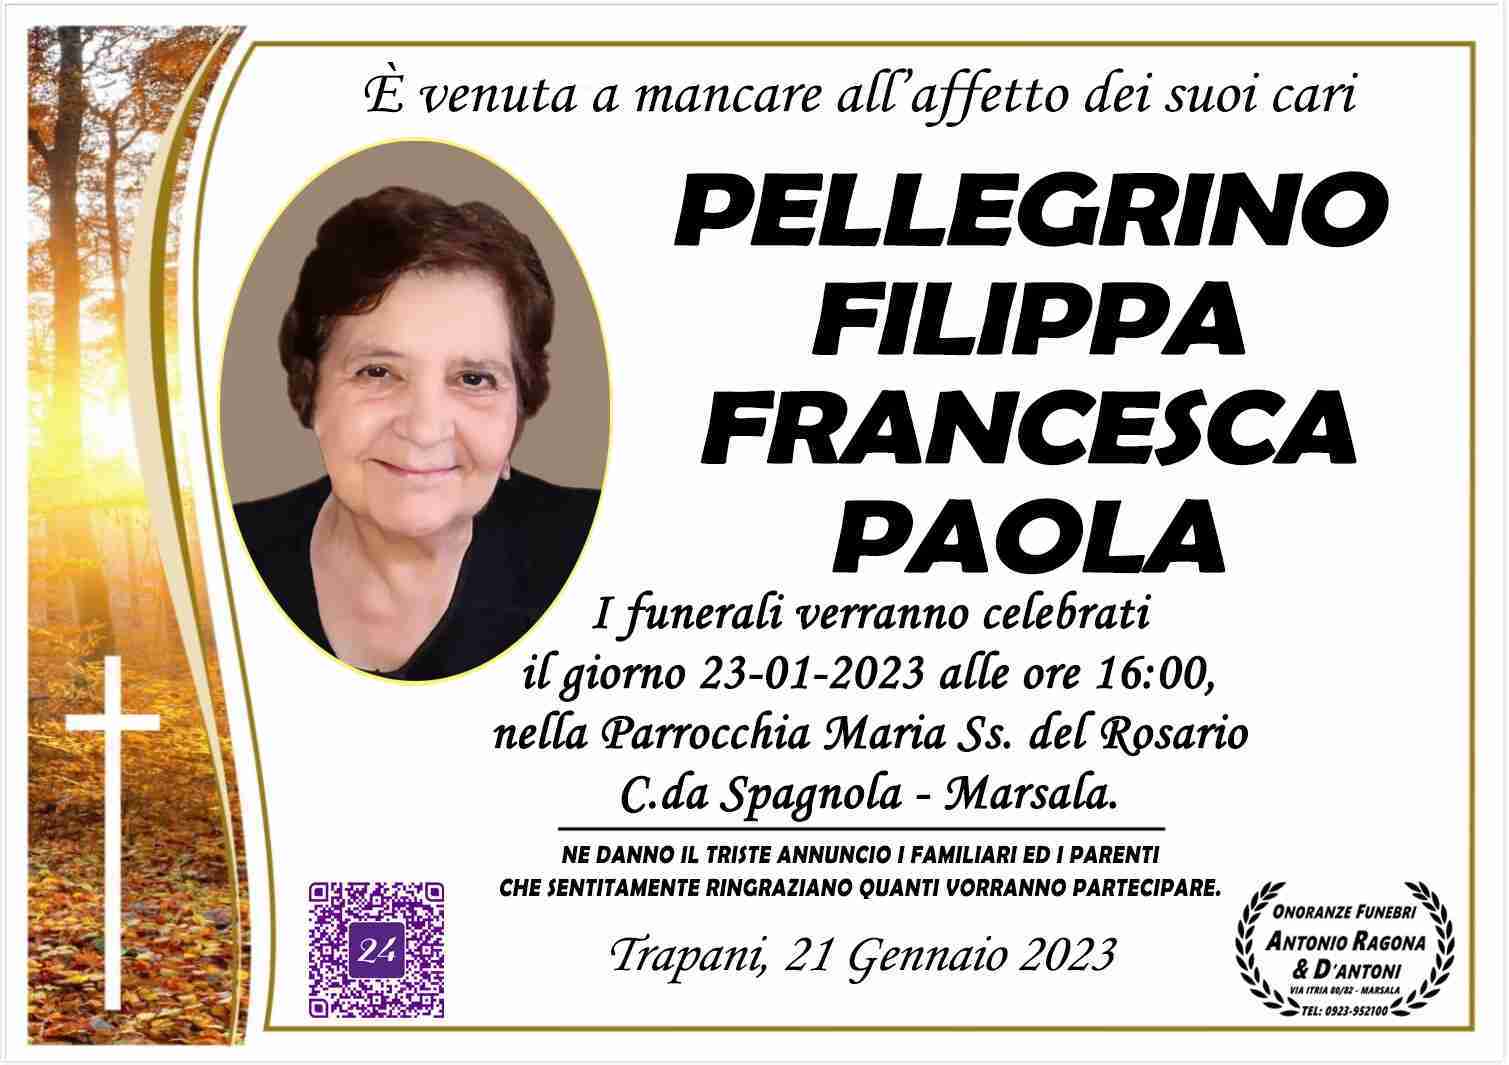 Filippa Francesca Paola Pellegrino